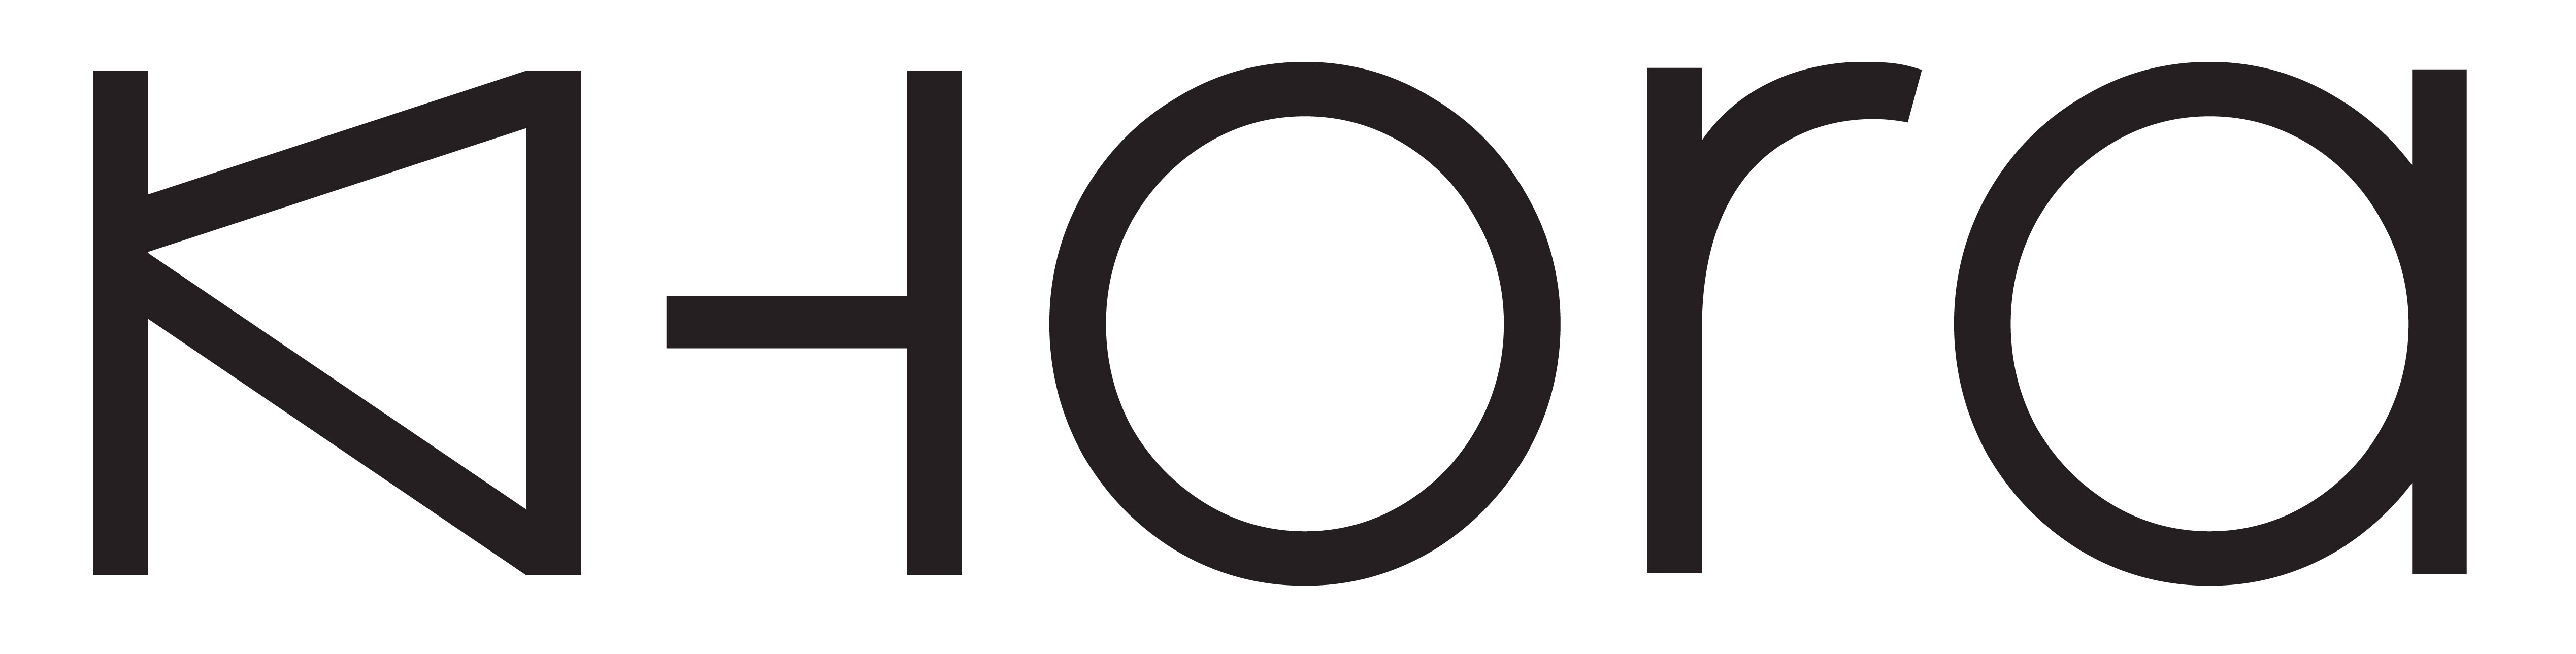 Rex Nichols Architects Announces Name Change to Studio KHORA